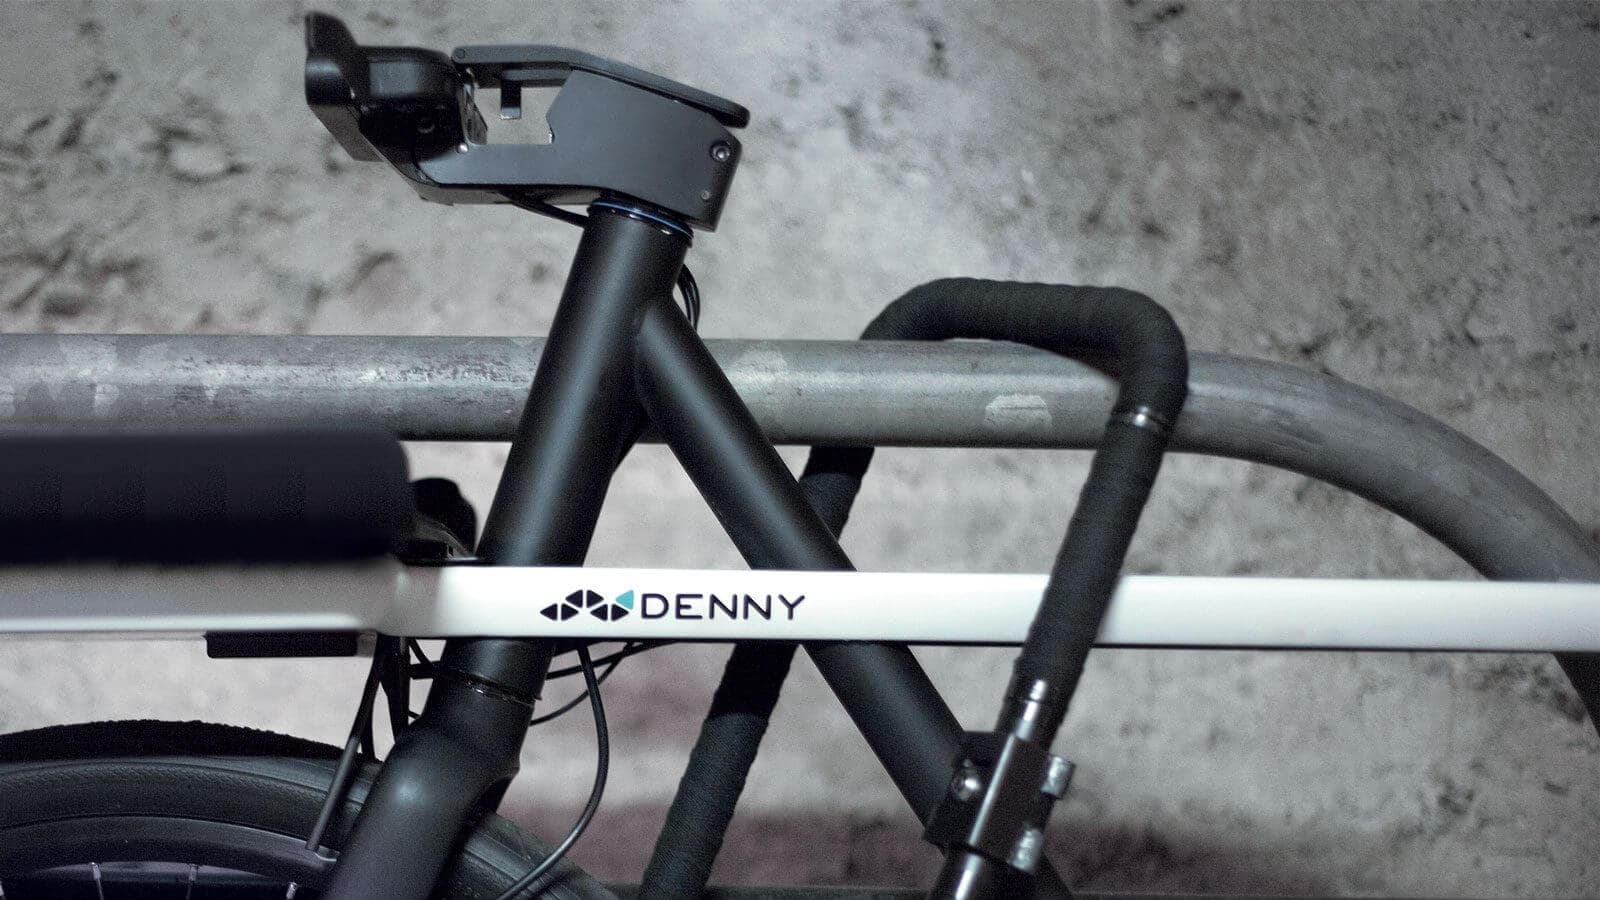 Denny bike fixed to pole with locking handlebar loop